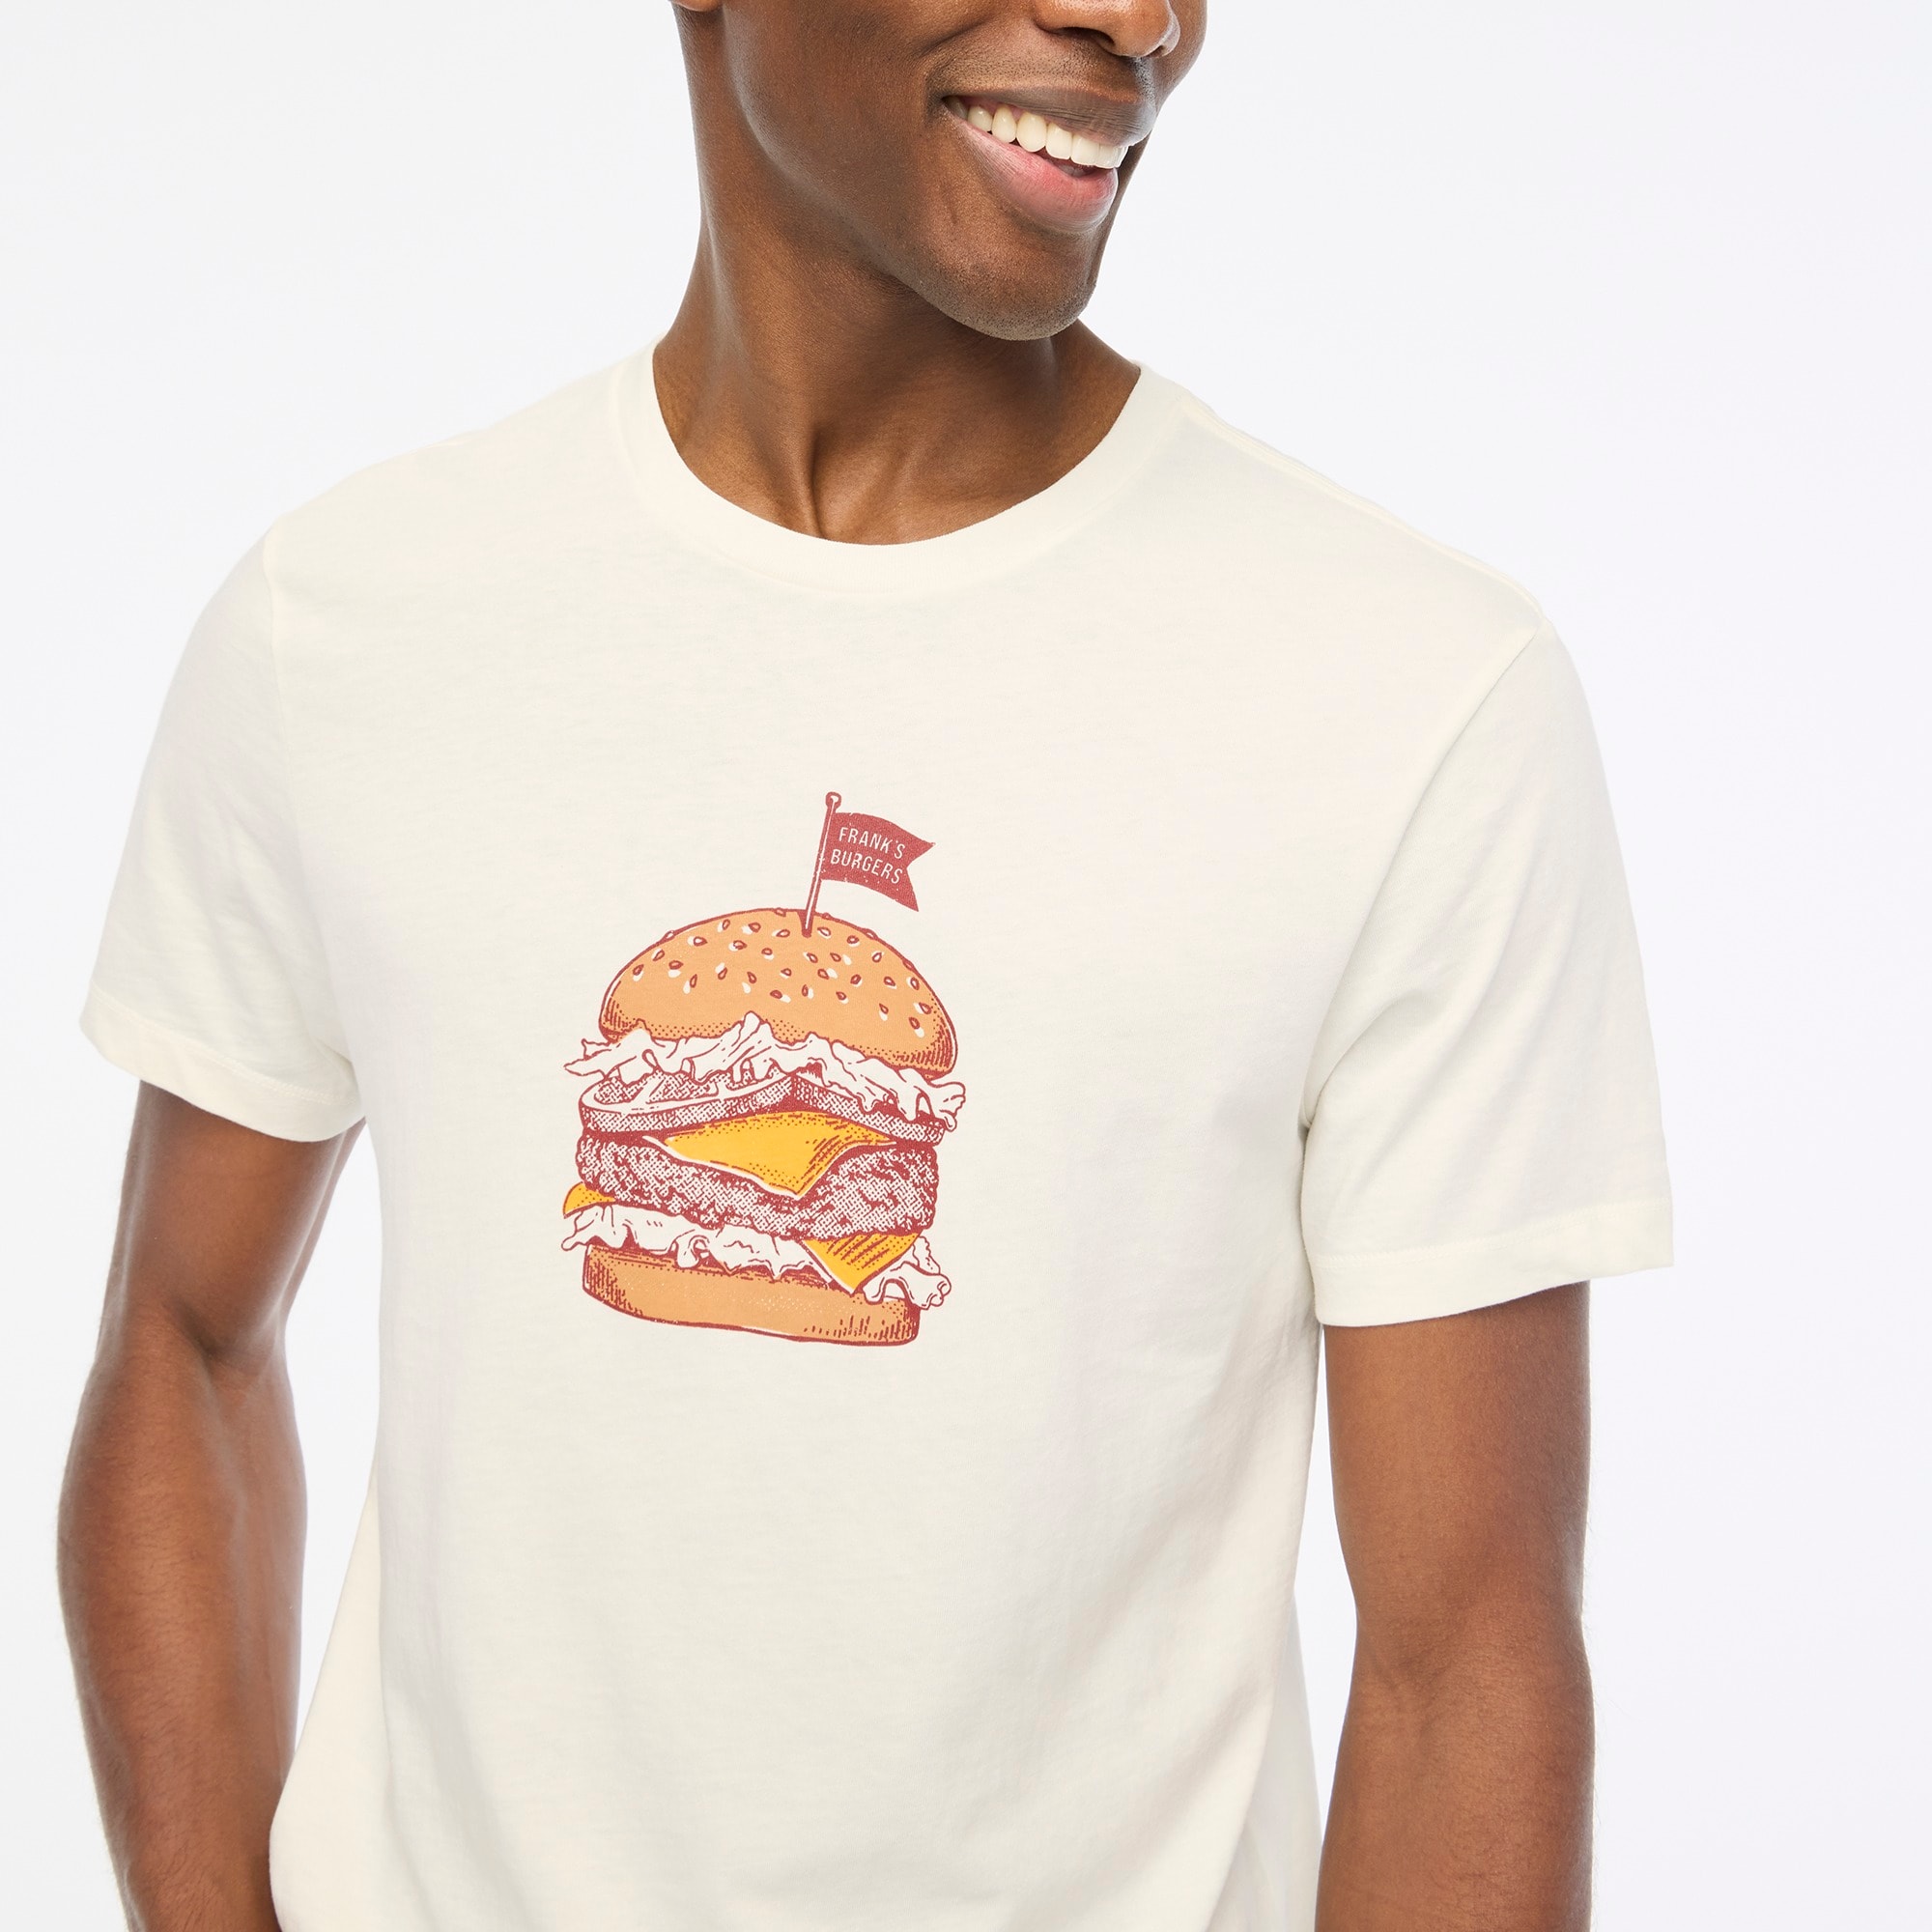 "Frank's burgers" graphic tee